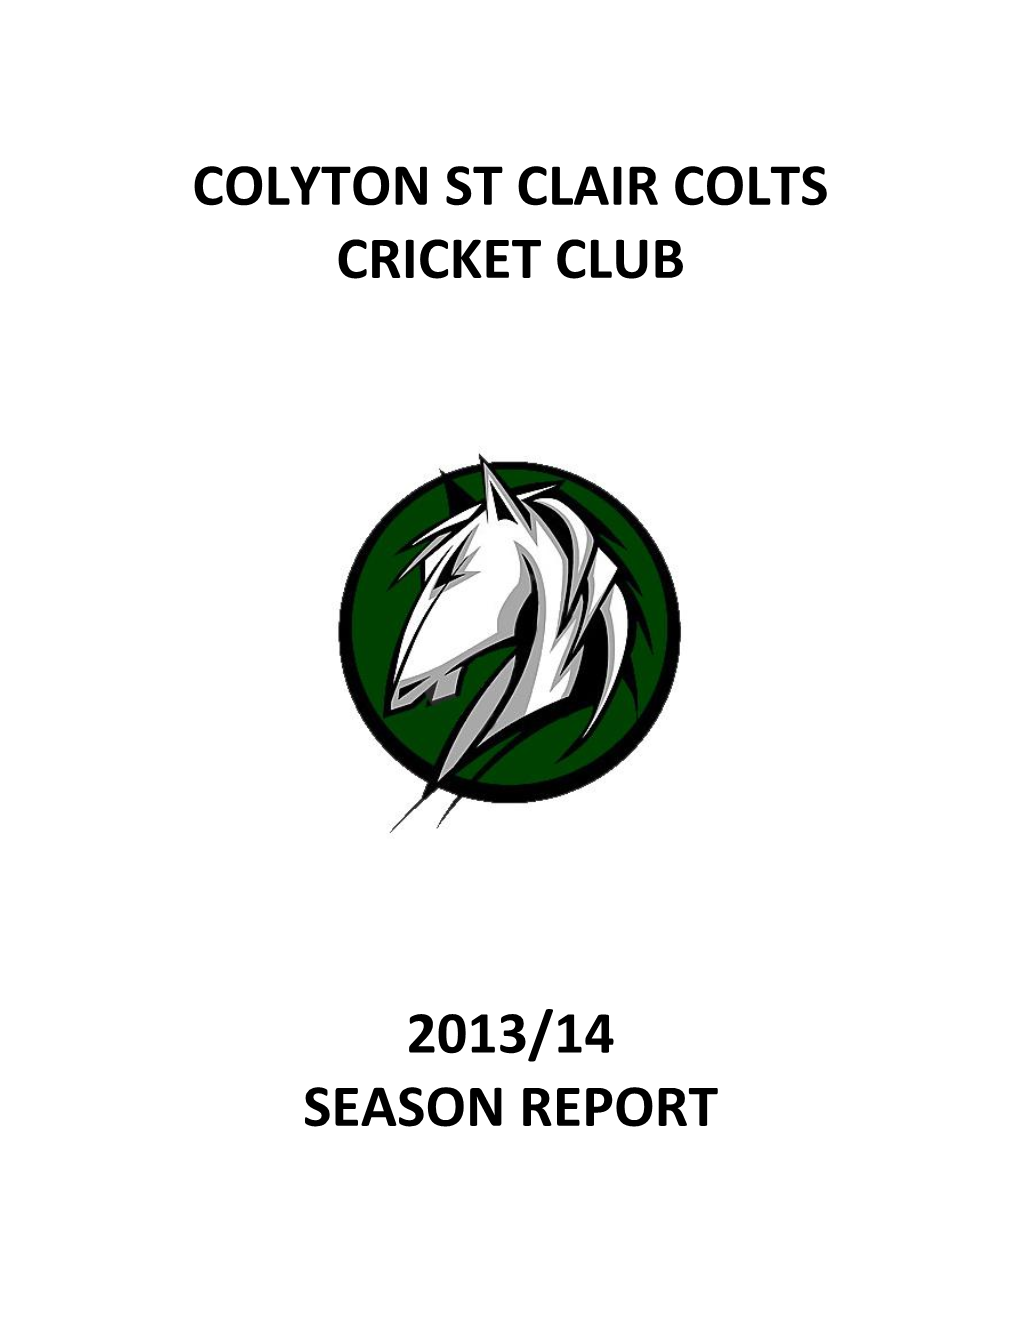 Colyton St Clair Colts Cricket Club 2013/14 Season